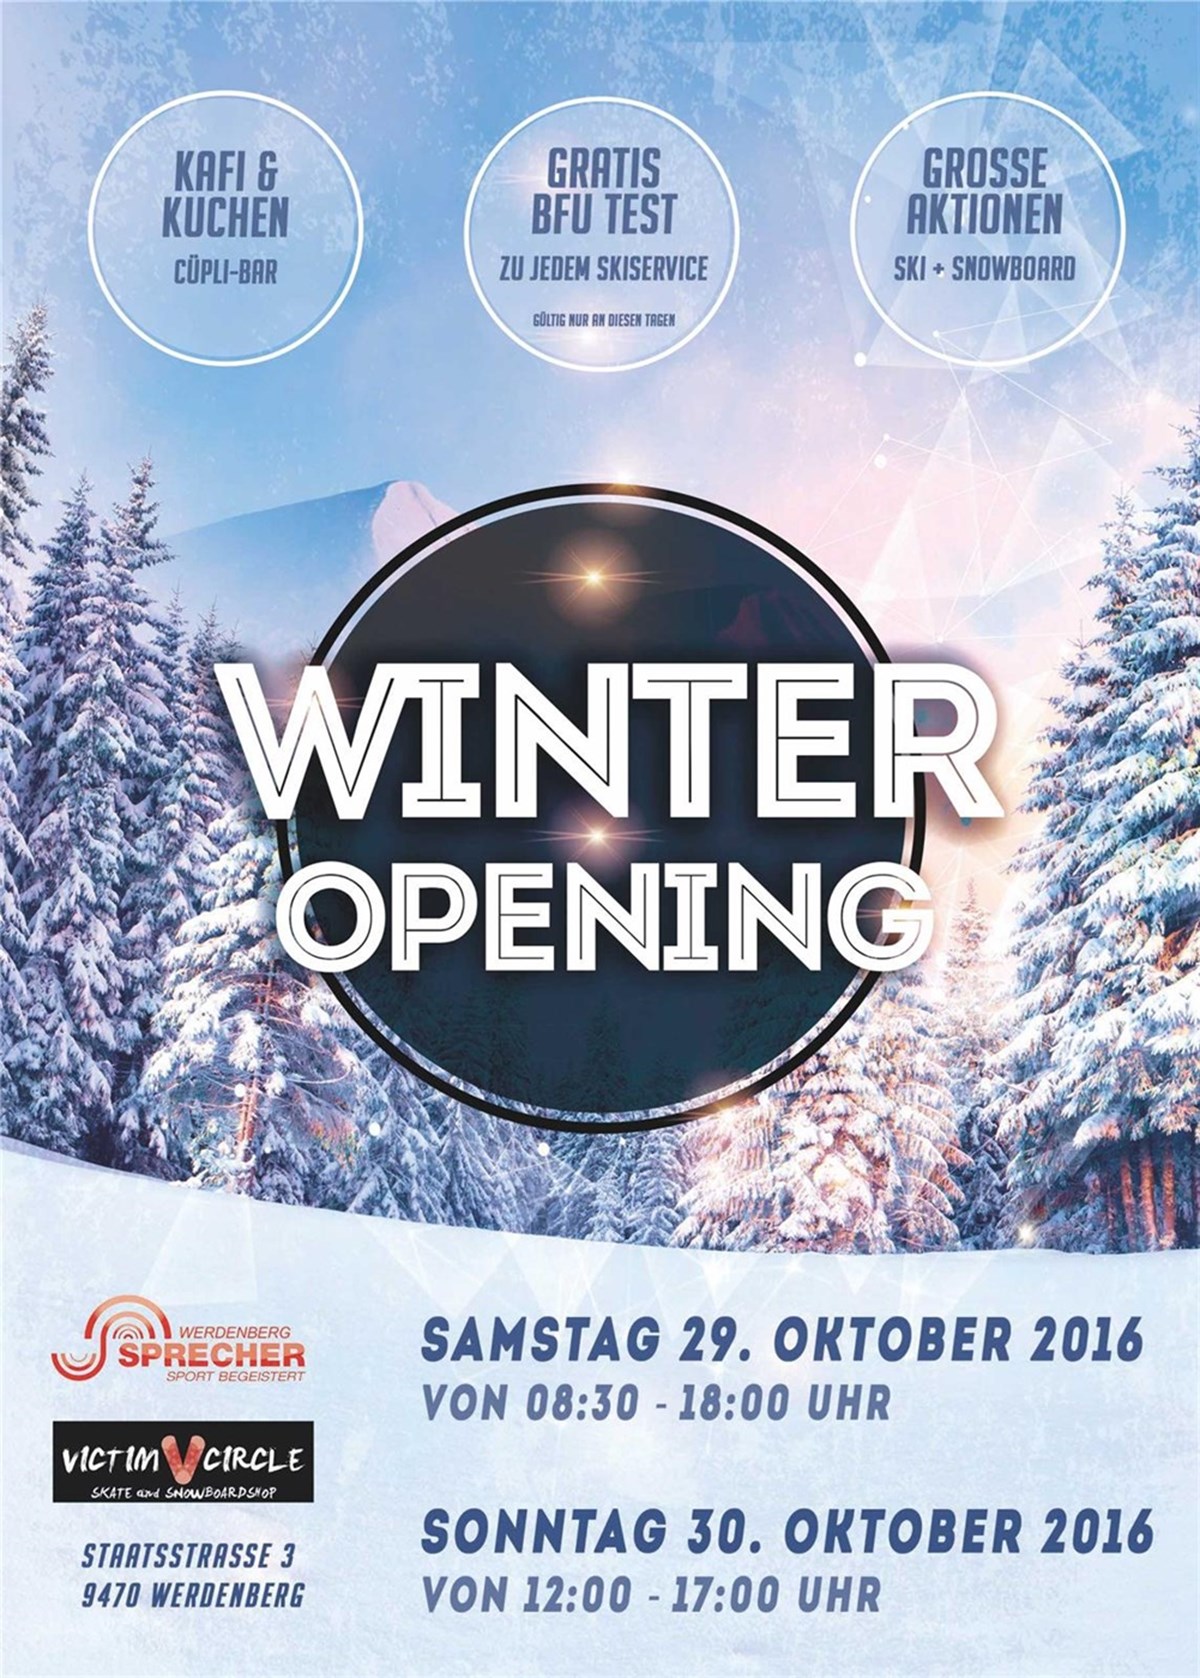 Winter Opening